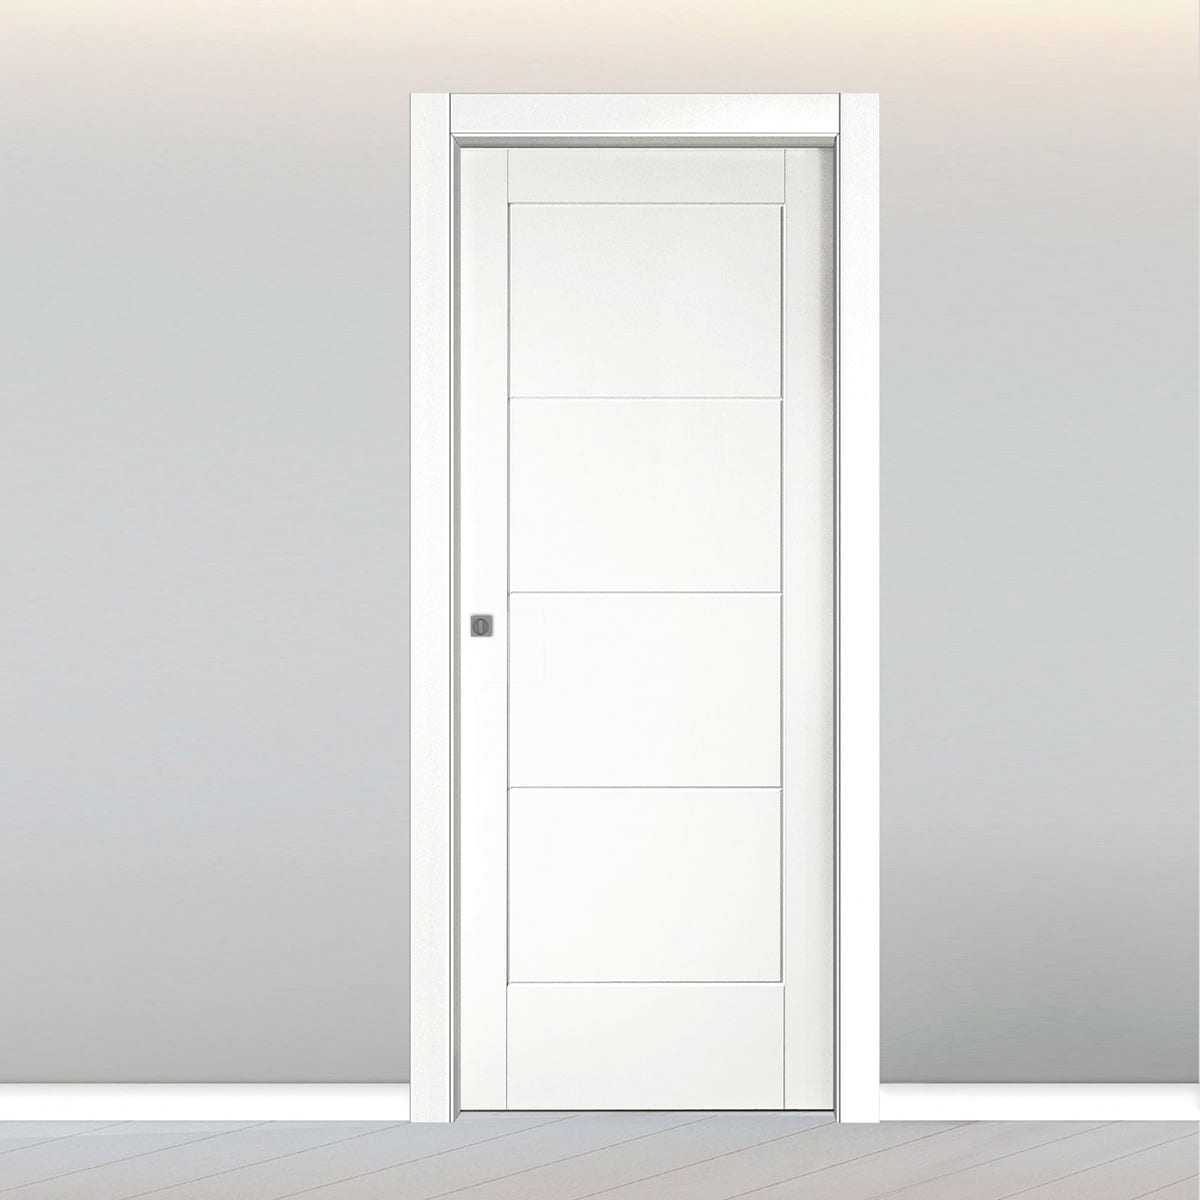 WHITE RIBERA SLIDING DOOR 80X210